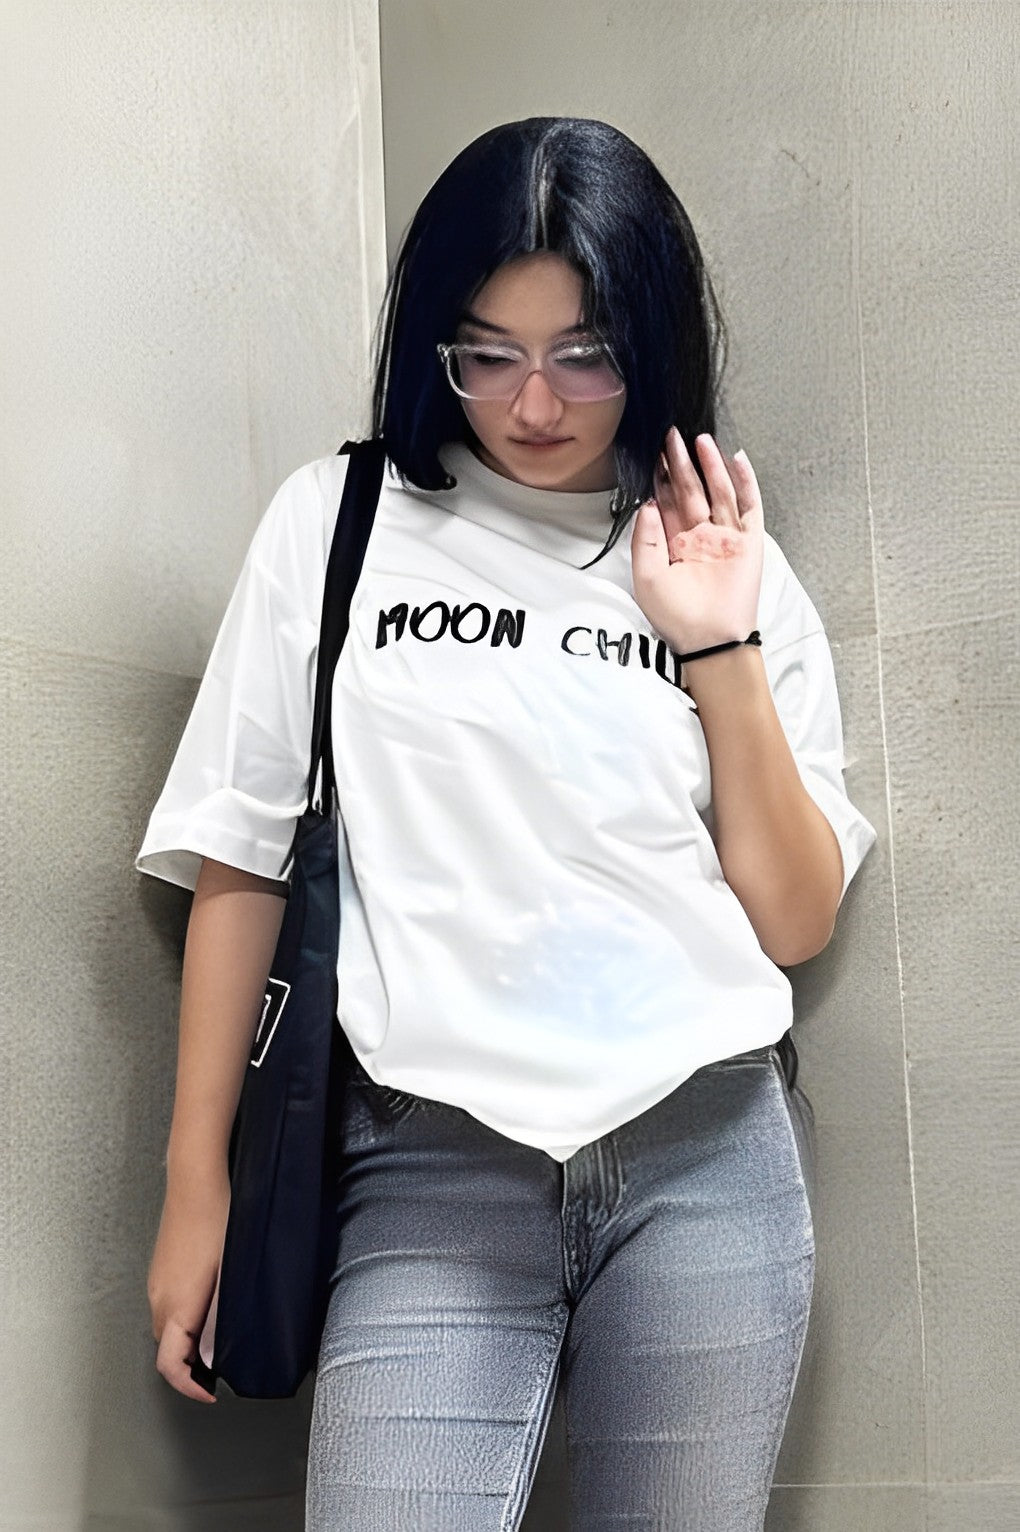 Moon Child Typography Oversized T-shirt